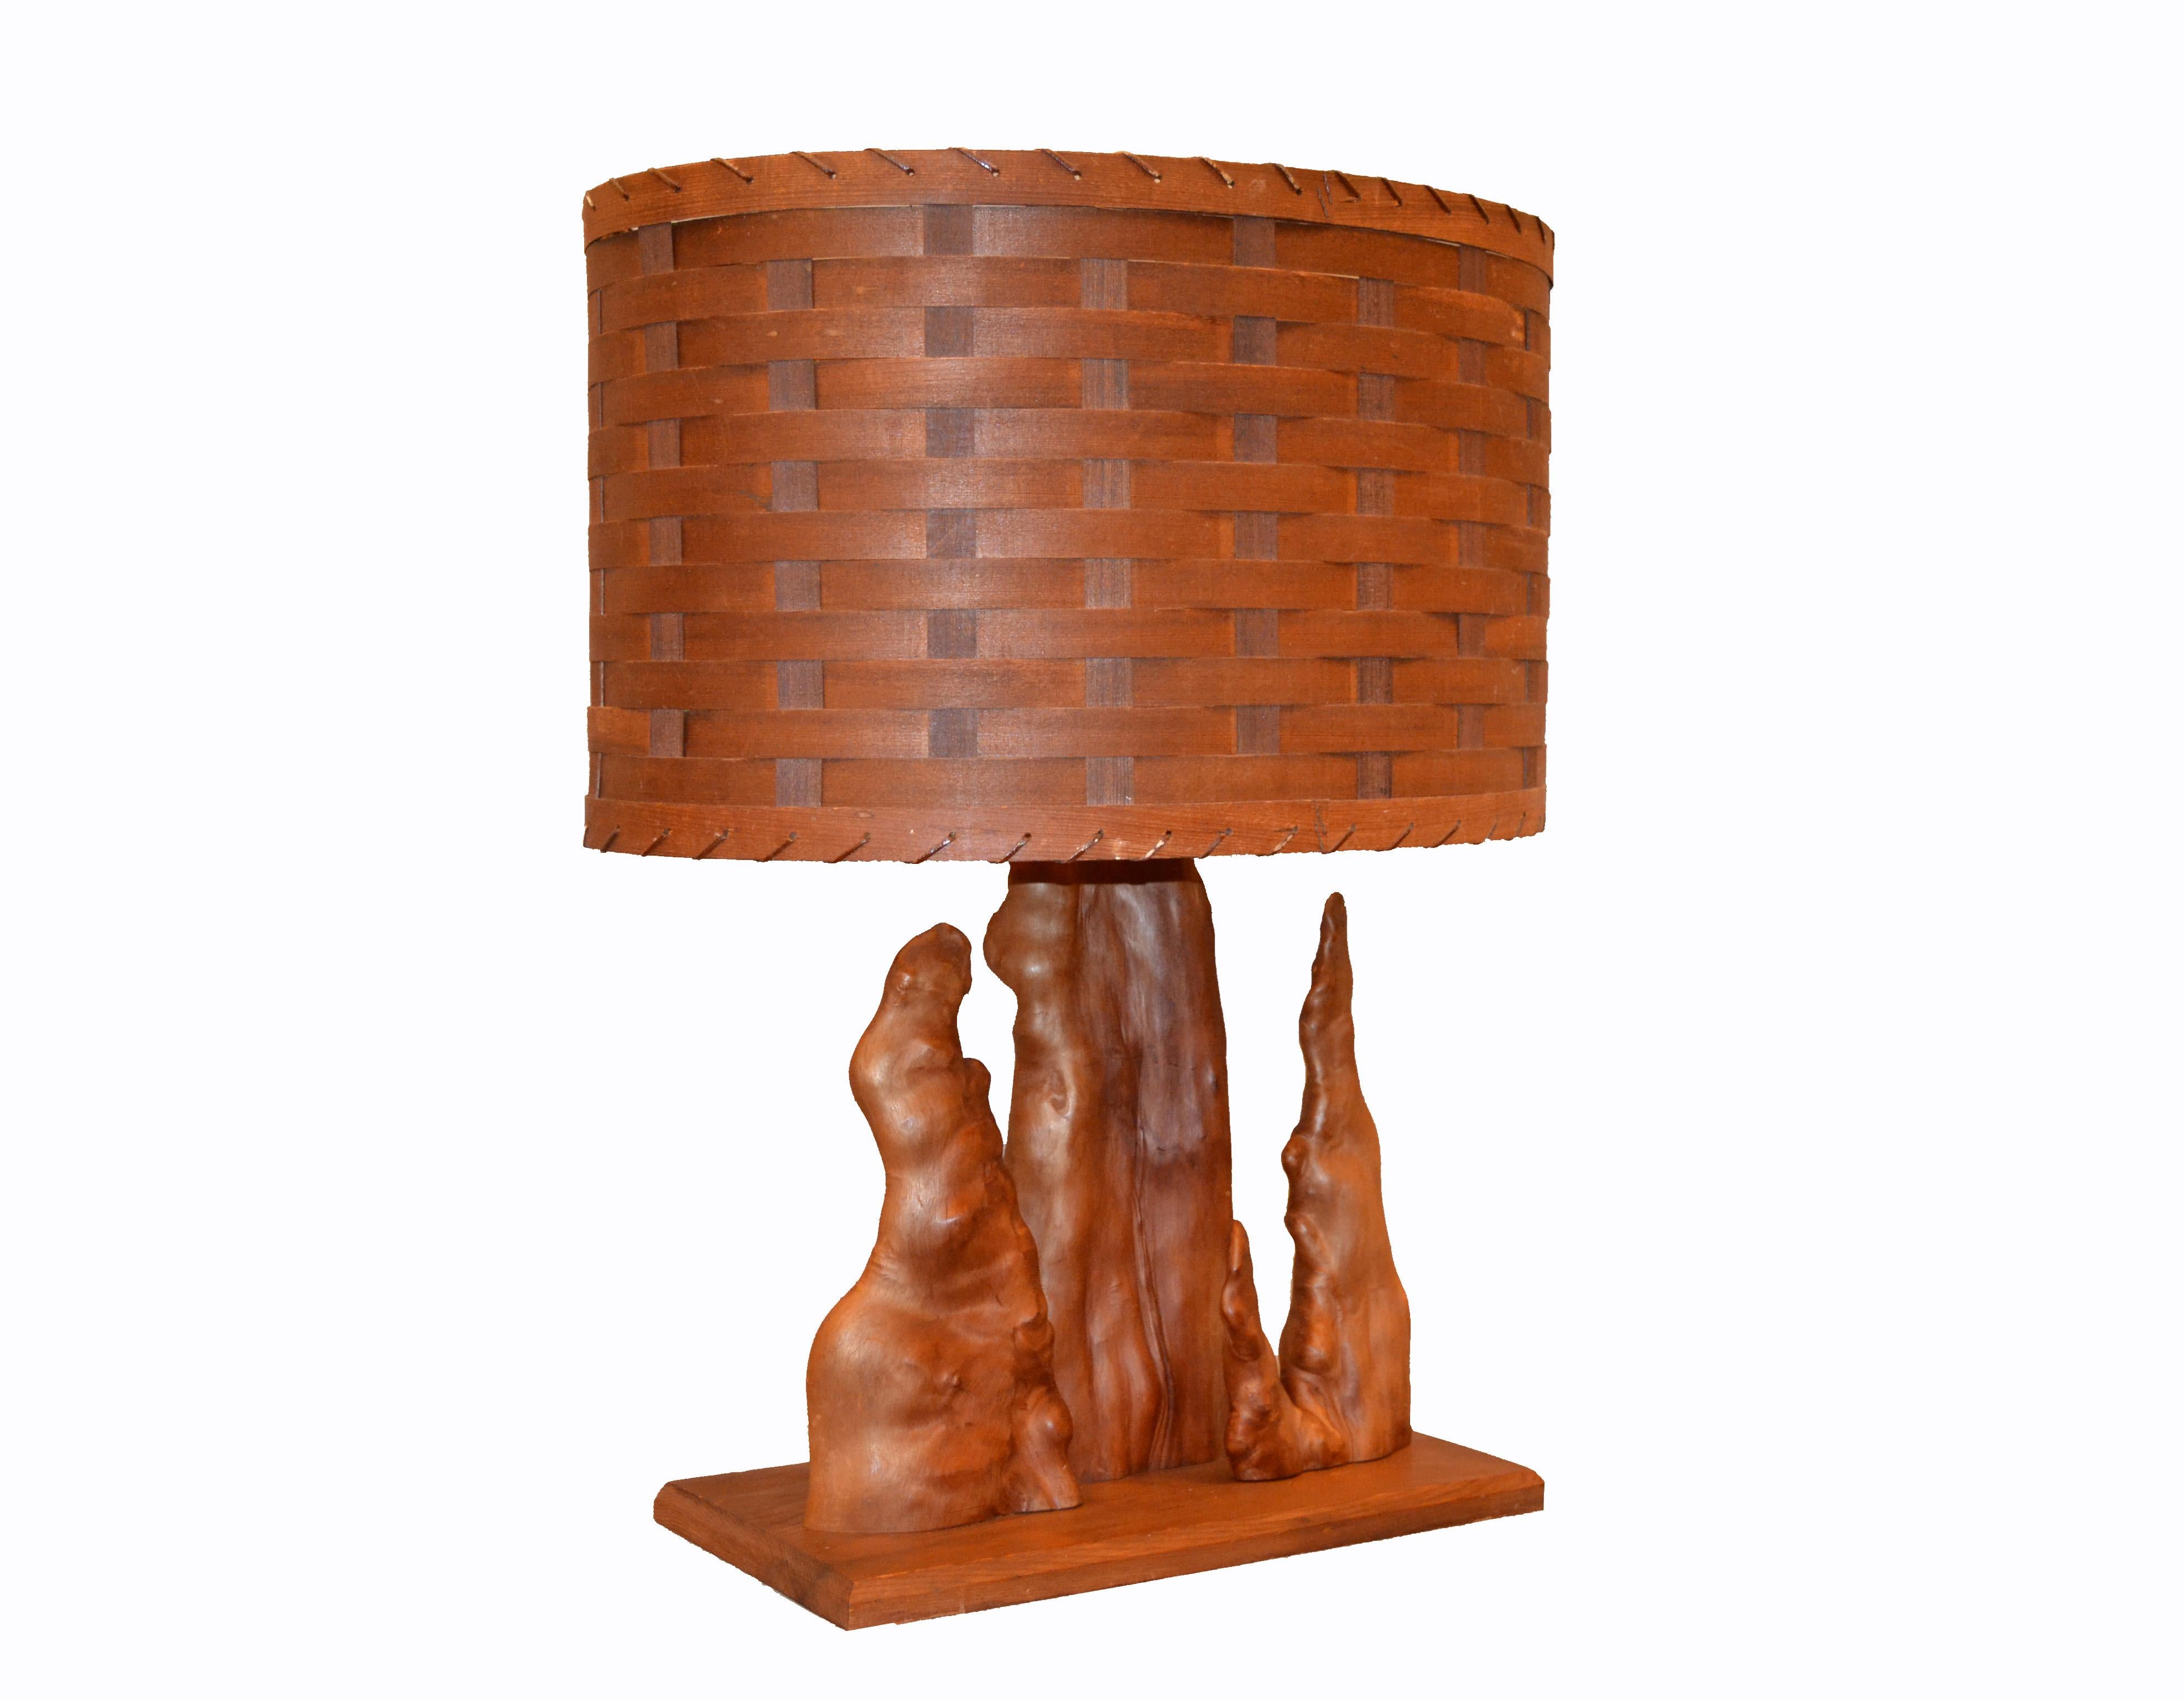 driftwood lamp base